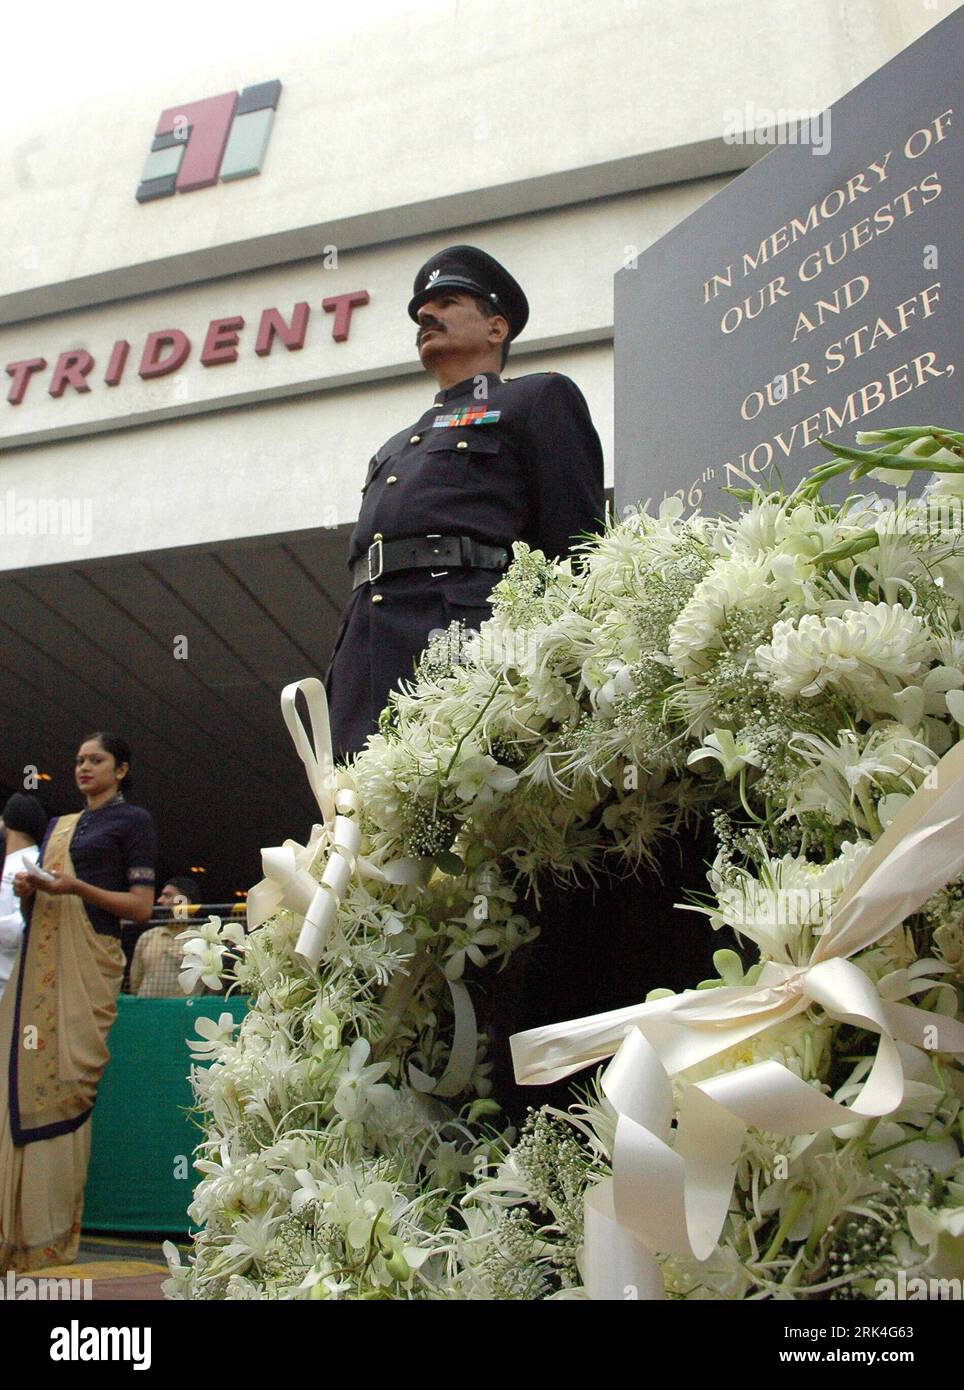 Bildnummer: 53628526  Datum: 26.11.2009  Copyright: imago/Xinhua (091126) -- MUMBAI, Nov. 26, 2009 (Xinhua) -- Wreaths to honor victims are seen in front of Oberoi Trident hotel, one of the sites of last year s terror attacks, in Mumbai city of India, Nov. 26, 2009. India marked the first anniversary of the 2008 terrorist attacks on Mumbai on Thursday. (Xinhua) (zcq) (4)INDIA-MUMBAI-VICTIMS-ANNIVERSARY PUBLICATIONxNOTxINxCHN Trauer Gedenken Opfer Mumbai Jahrestag kbdig xcb 2009 hoch o0 Kranzniederlegung Kranz    Bildnummer 53628526 Date 26 11 2009 Copyright Imago XINHUA  Mumbai Nov 26 2009 XIN Stock Photo